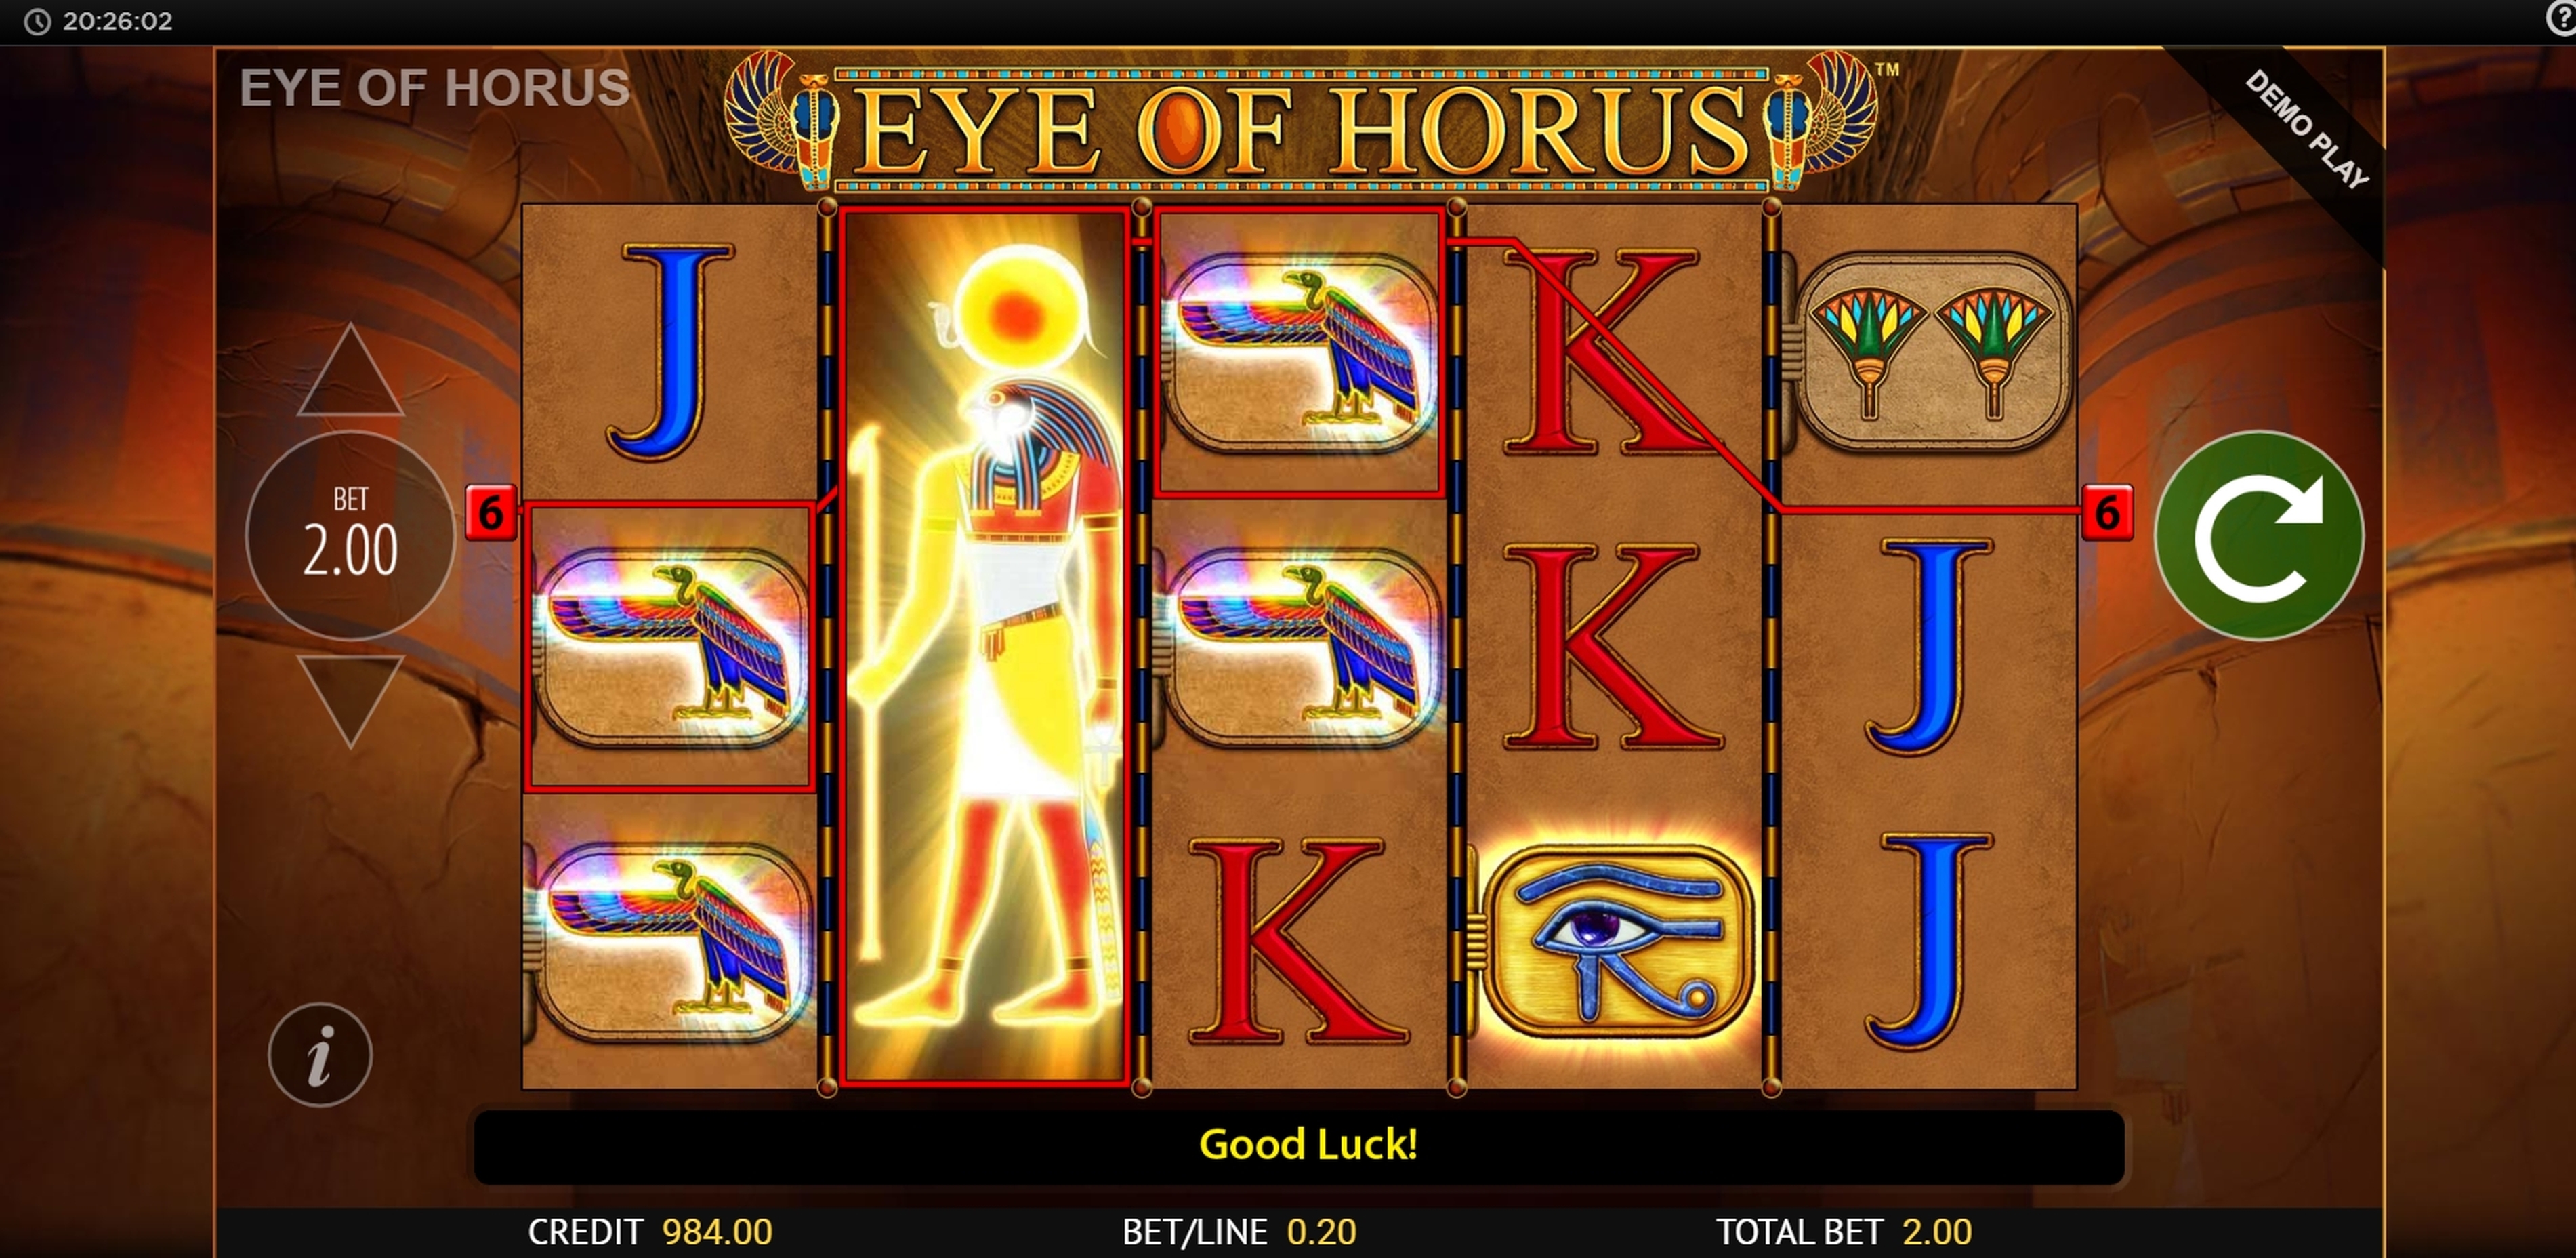 Win Money in Eye of Horus Free Slot Game by Reel Time Gaming